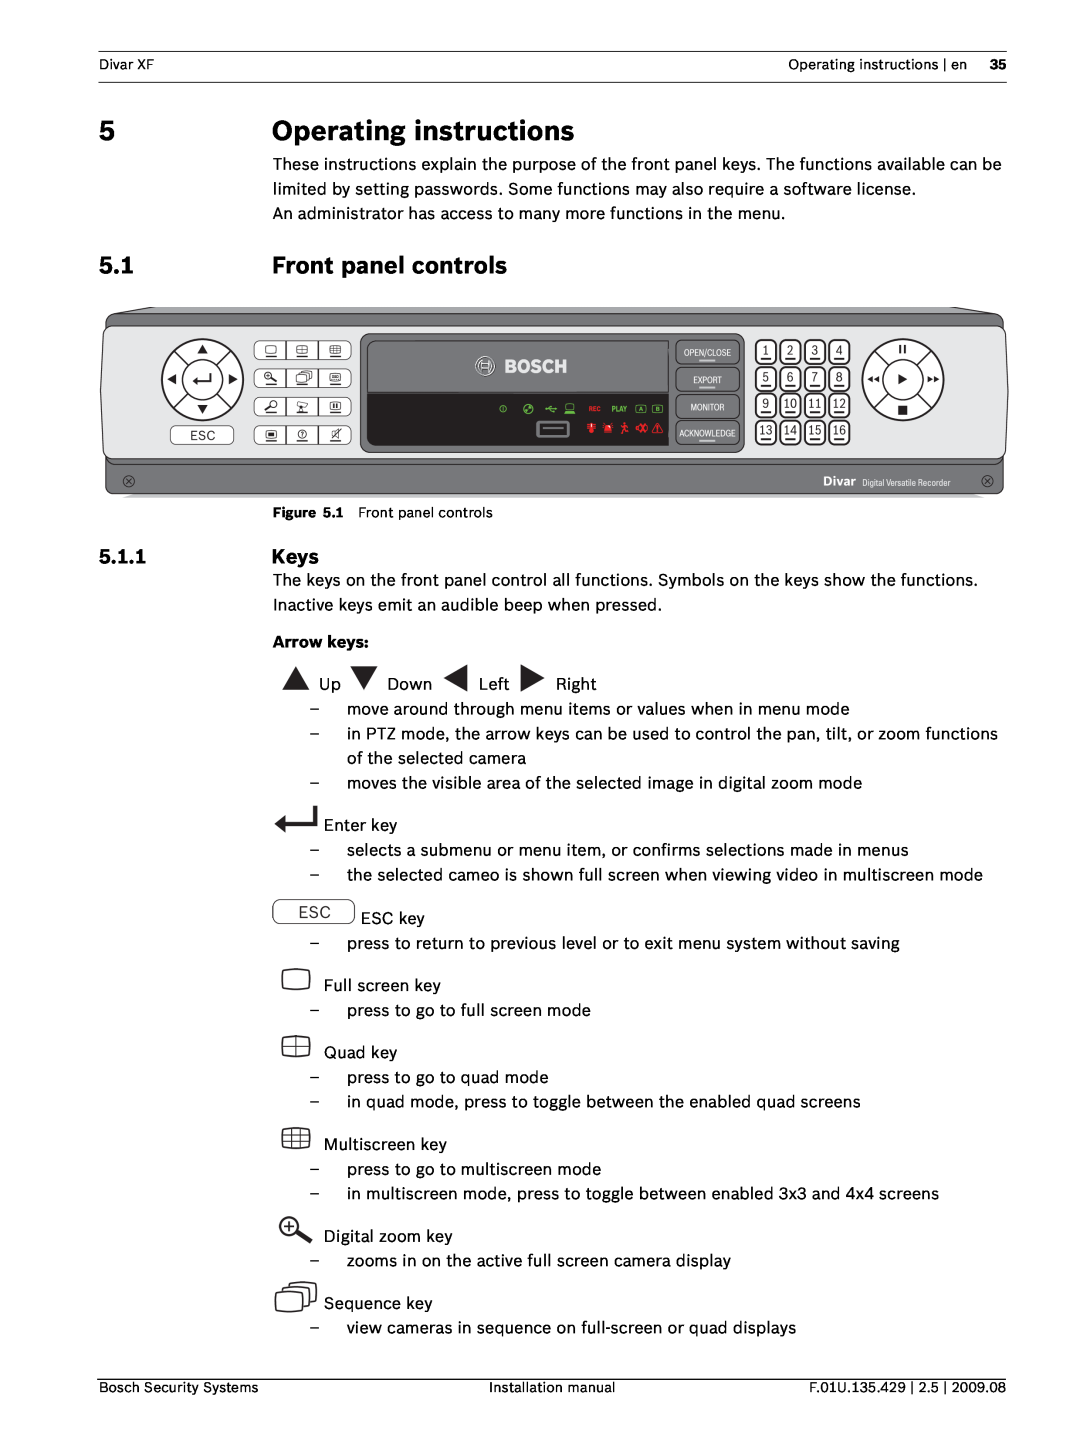 Bosch Appliances XF installation manual Operating instructions, Front panel controls, 5.1.1Keys, Arrow keys 